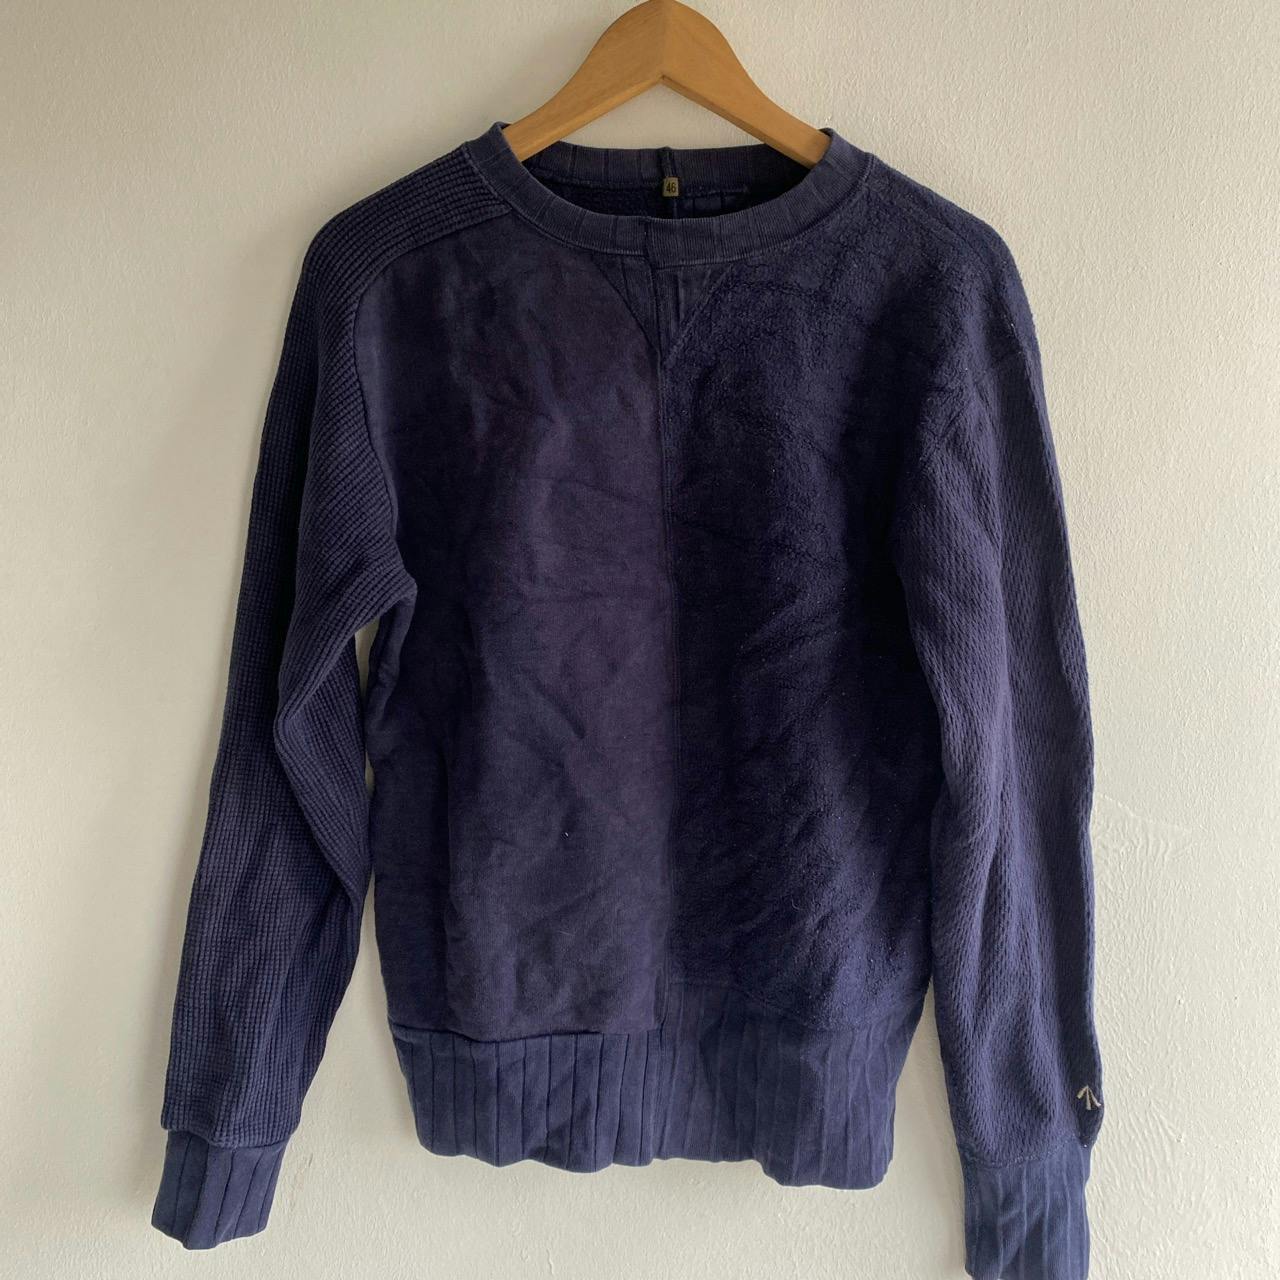 Nigel Cabourn Outer Limit Sweatshirt Pattern 1949 - 1